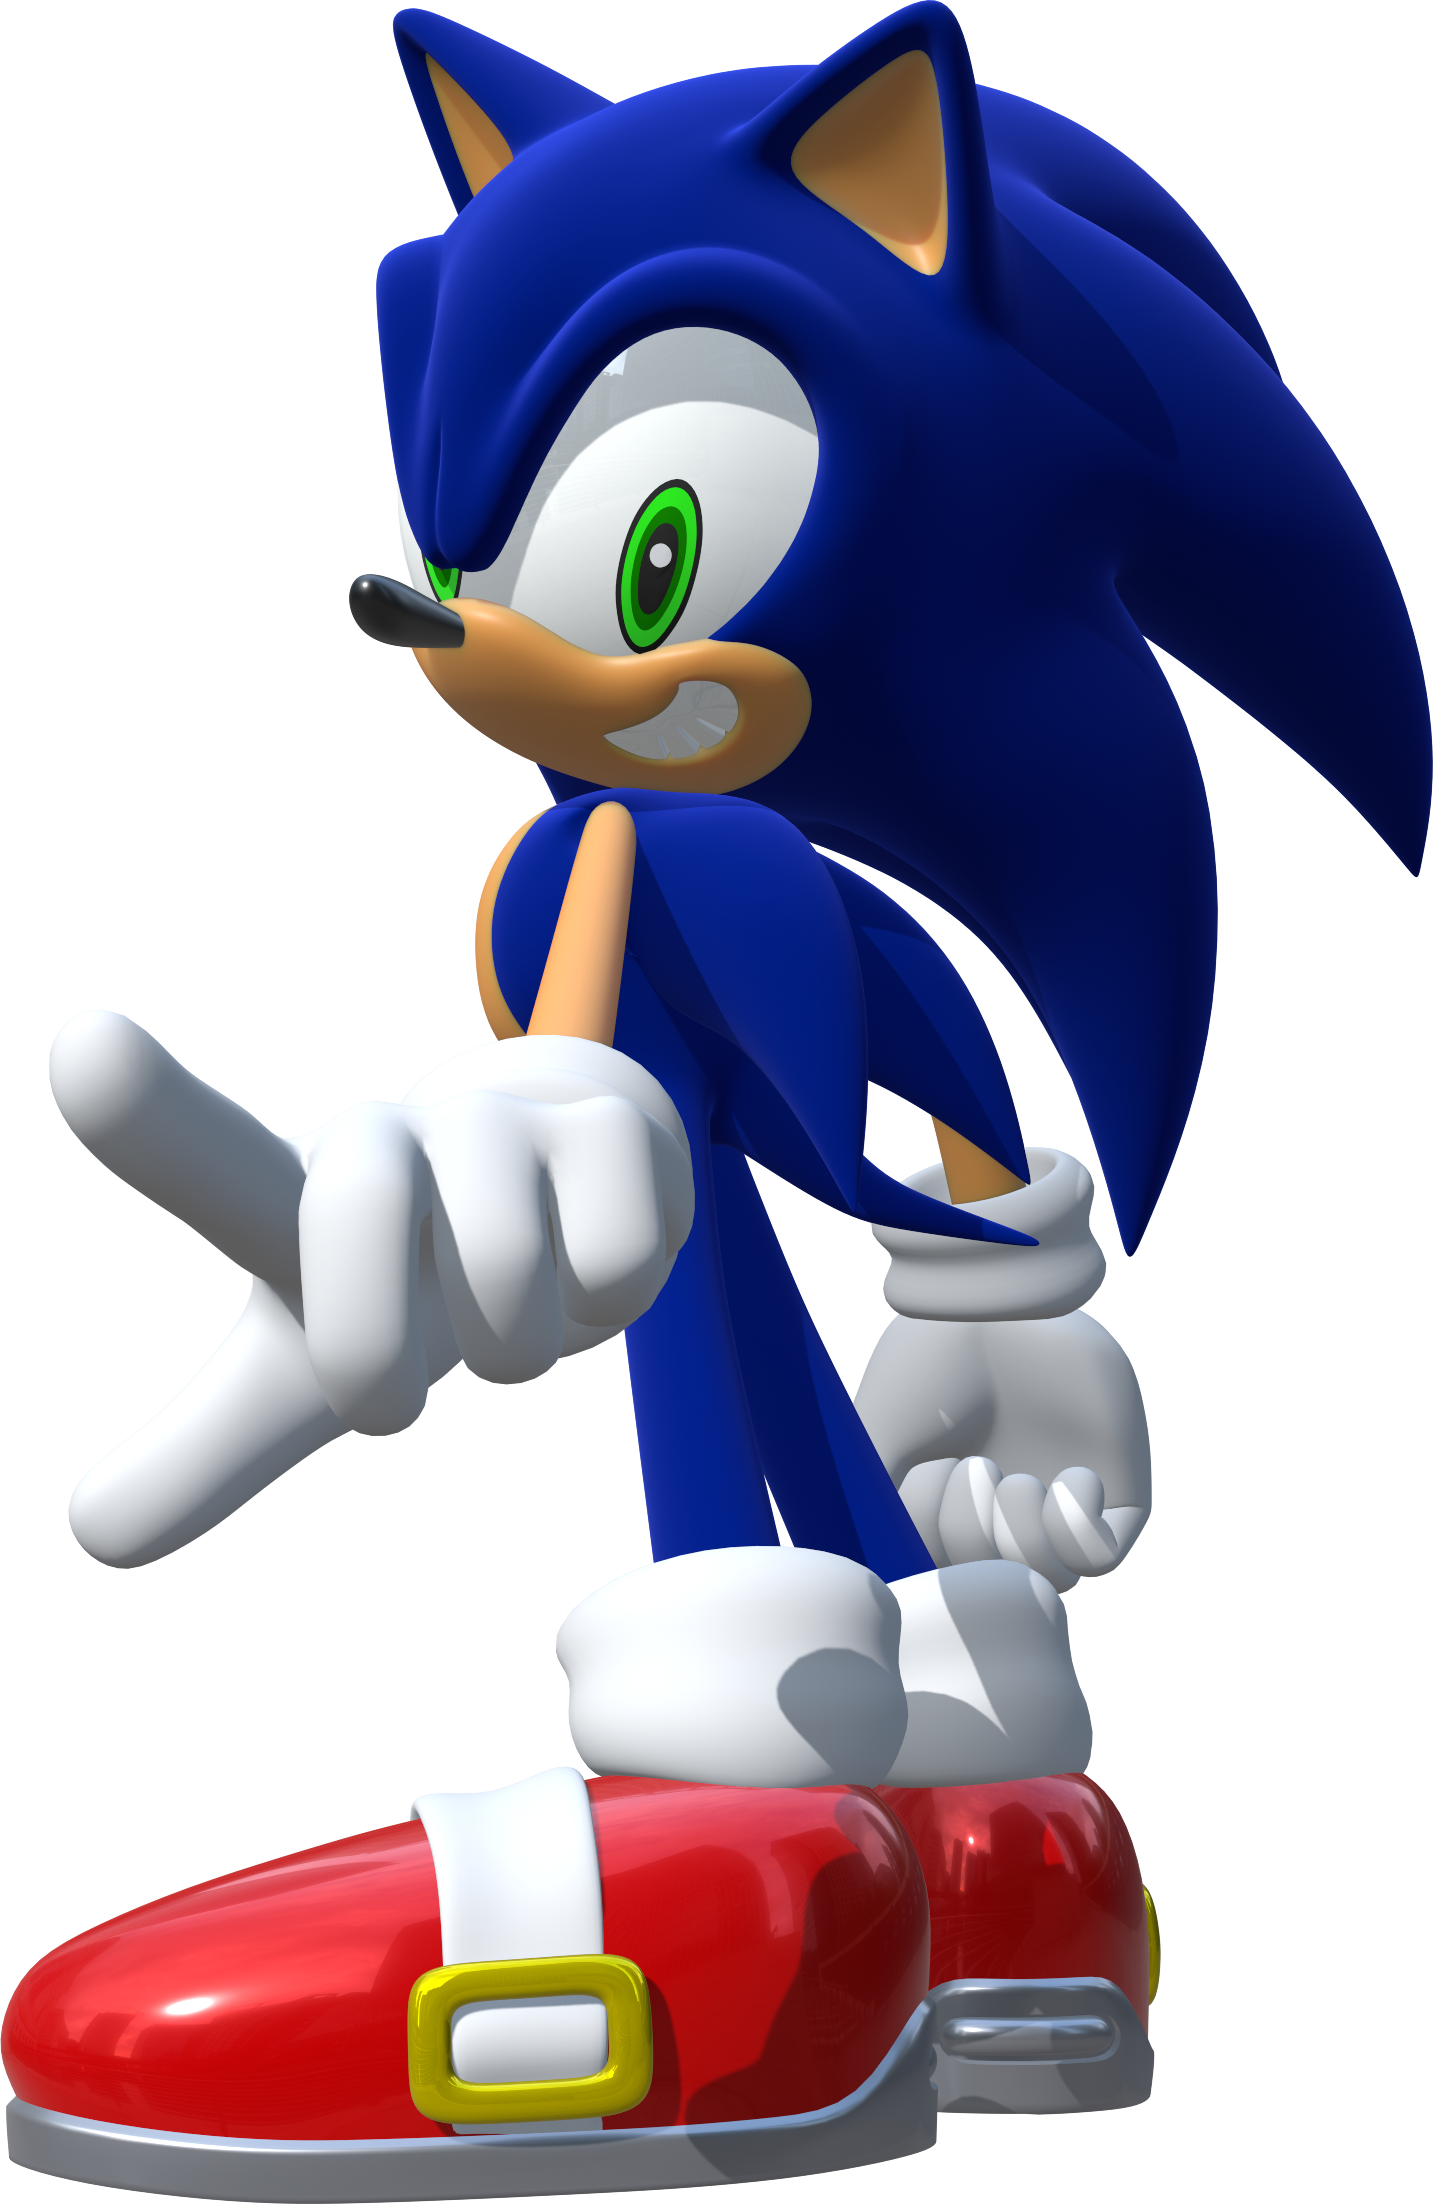 Custom Cursor Darkspine Sonic from Sonic the Hedgehog